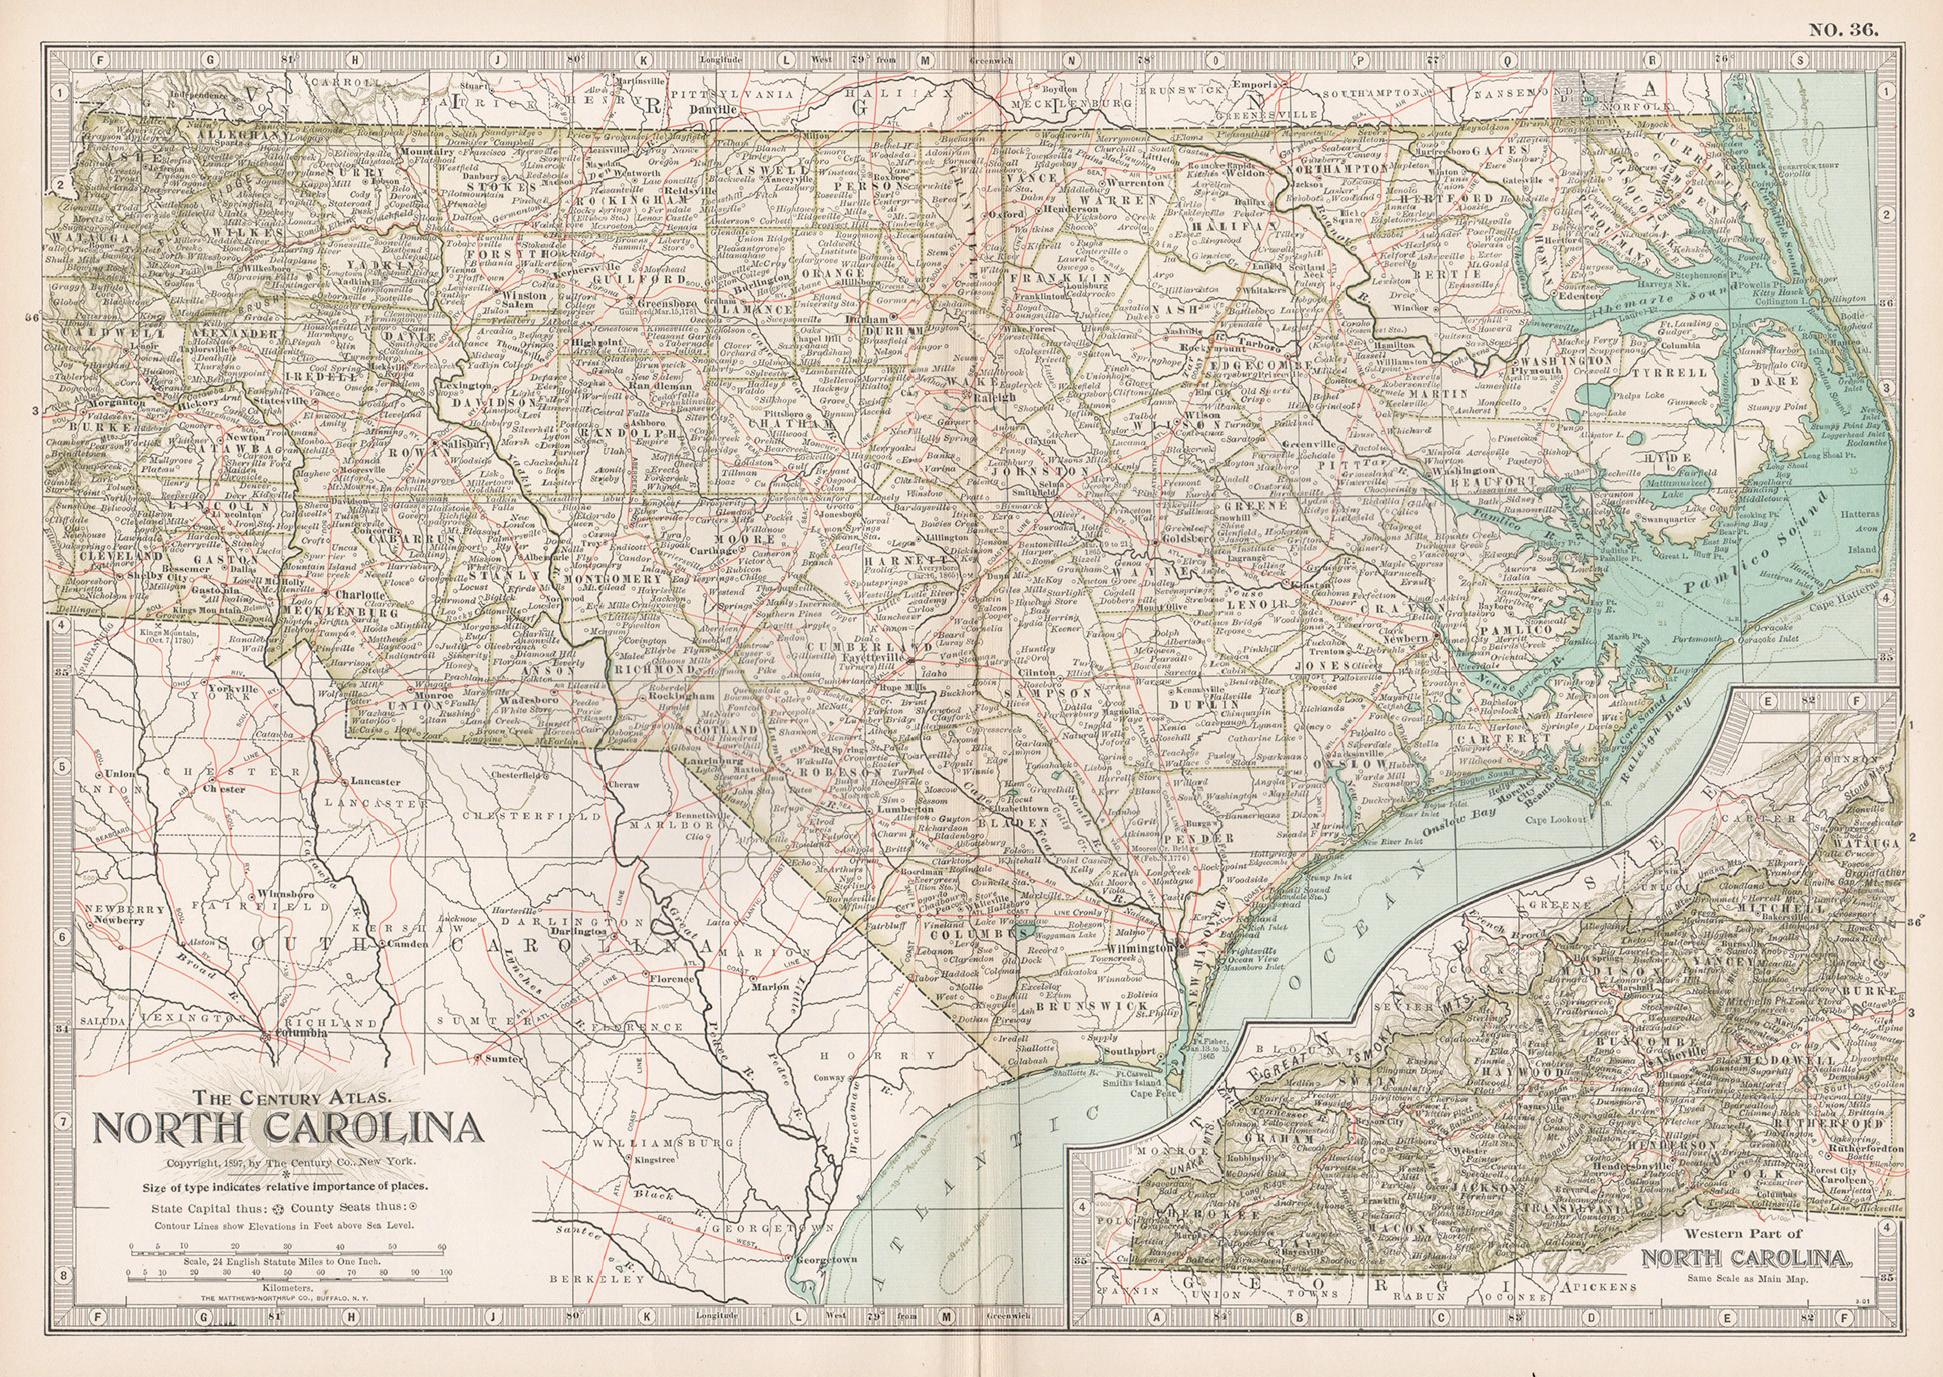 Unknown Print - North Carolina. USA. Century Atlas state antique vintage map